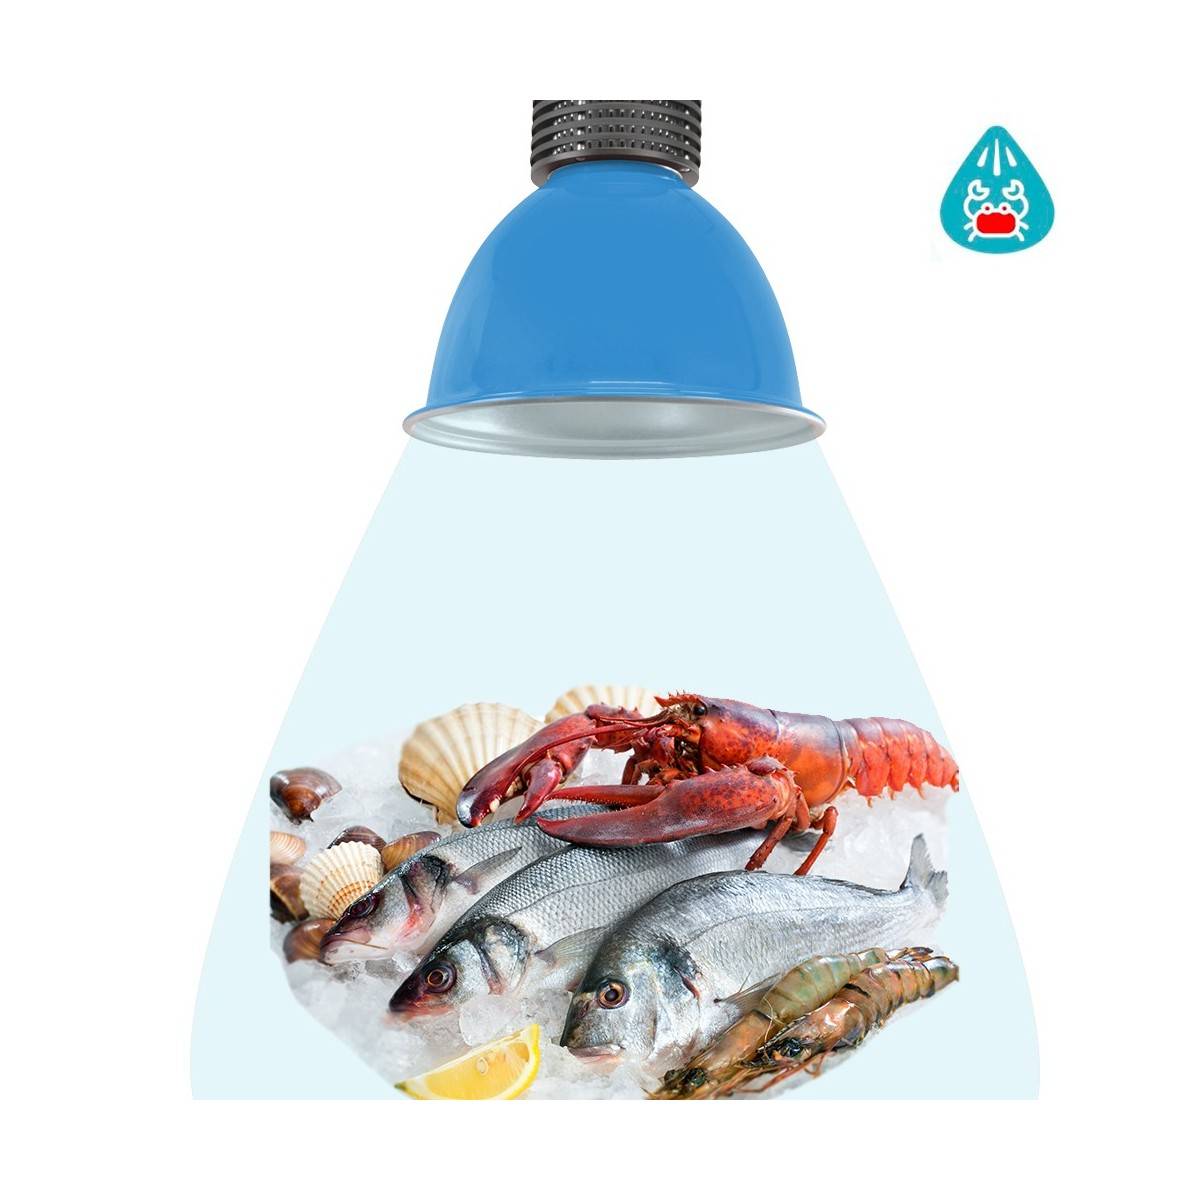 Campana LED 30W especial para pescaderías y marisquerías